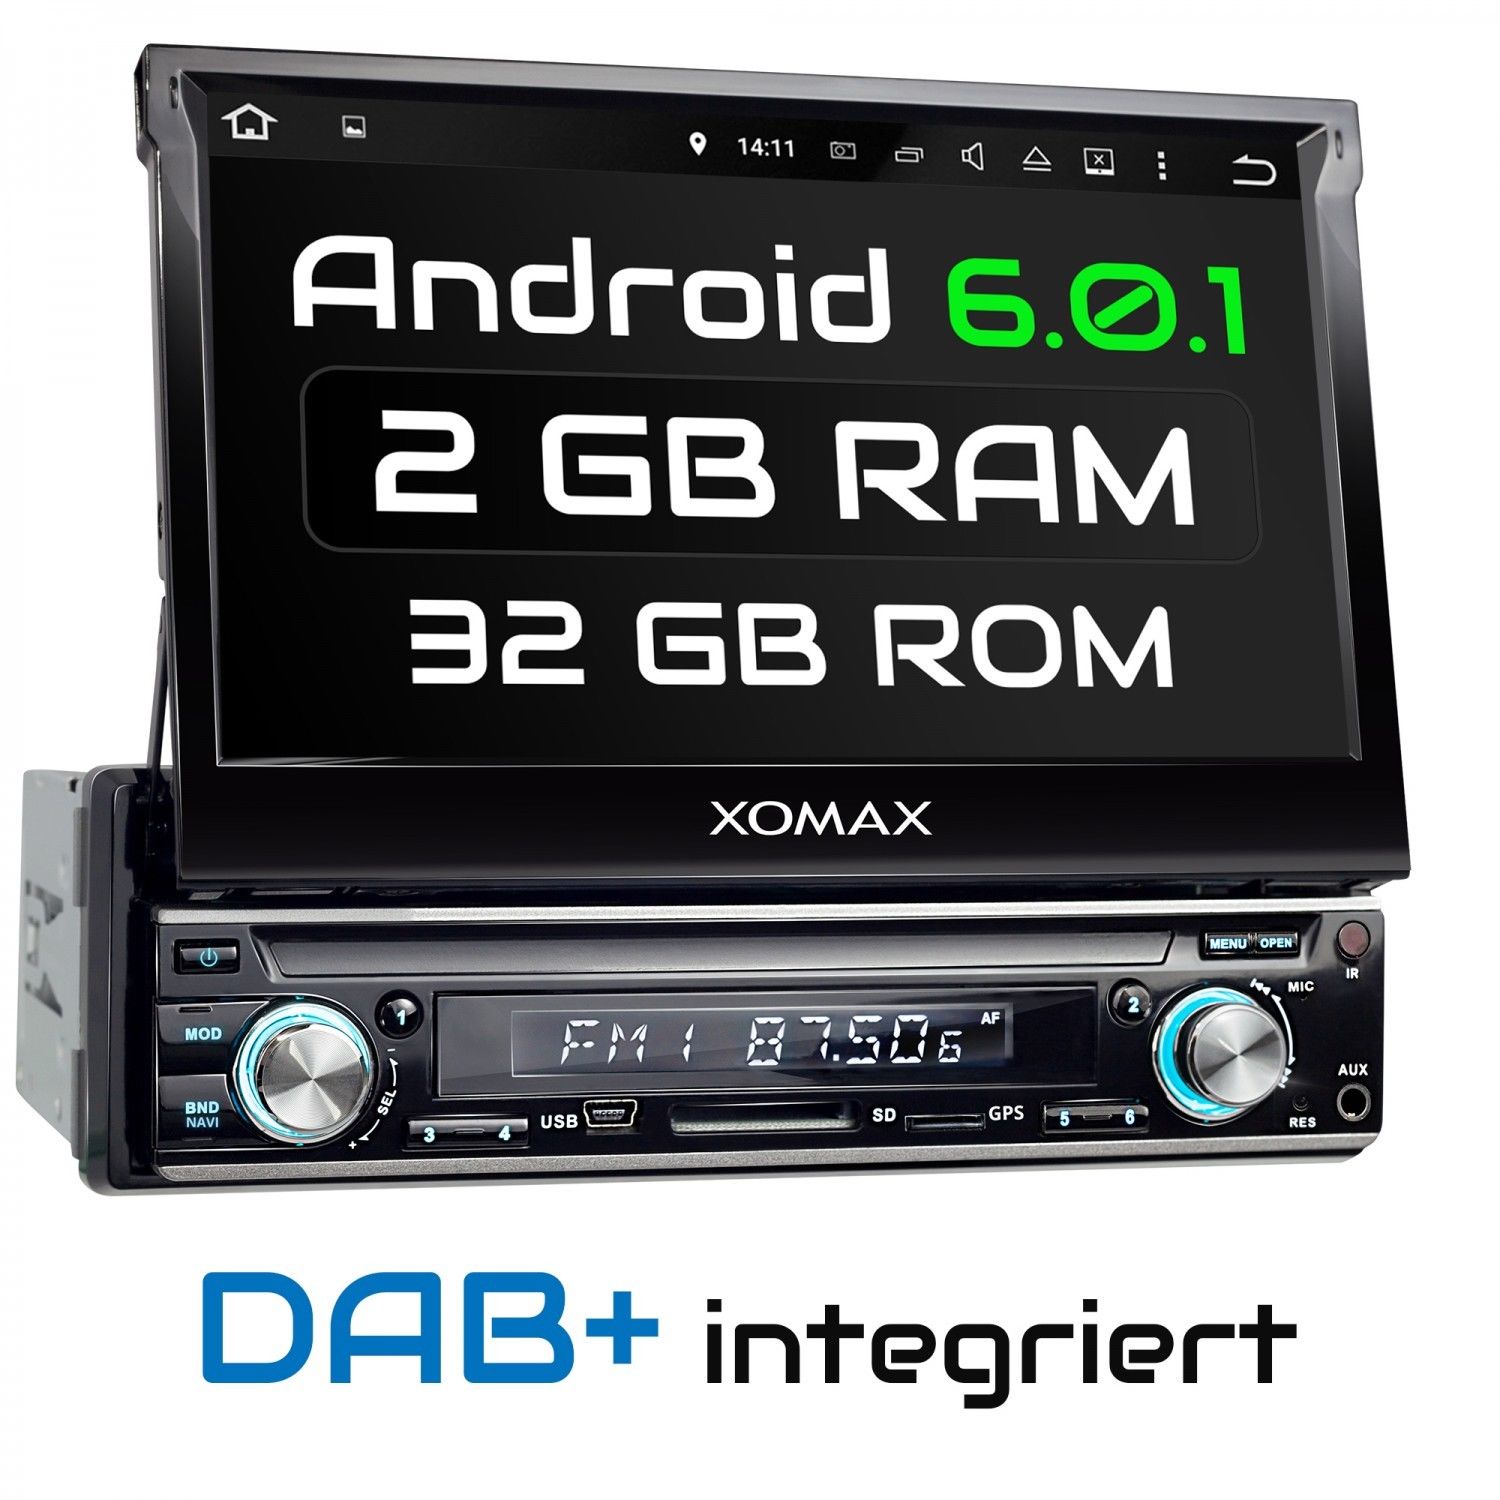 DAB+ AUTORADIO MIT ANDROID 6.0.1 NAVIGATION DAB RADIO WIFI USB SD BLUETOOTH 1DIN